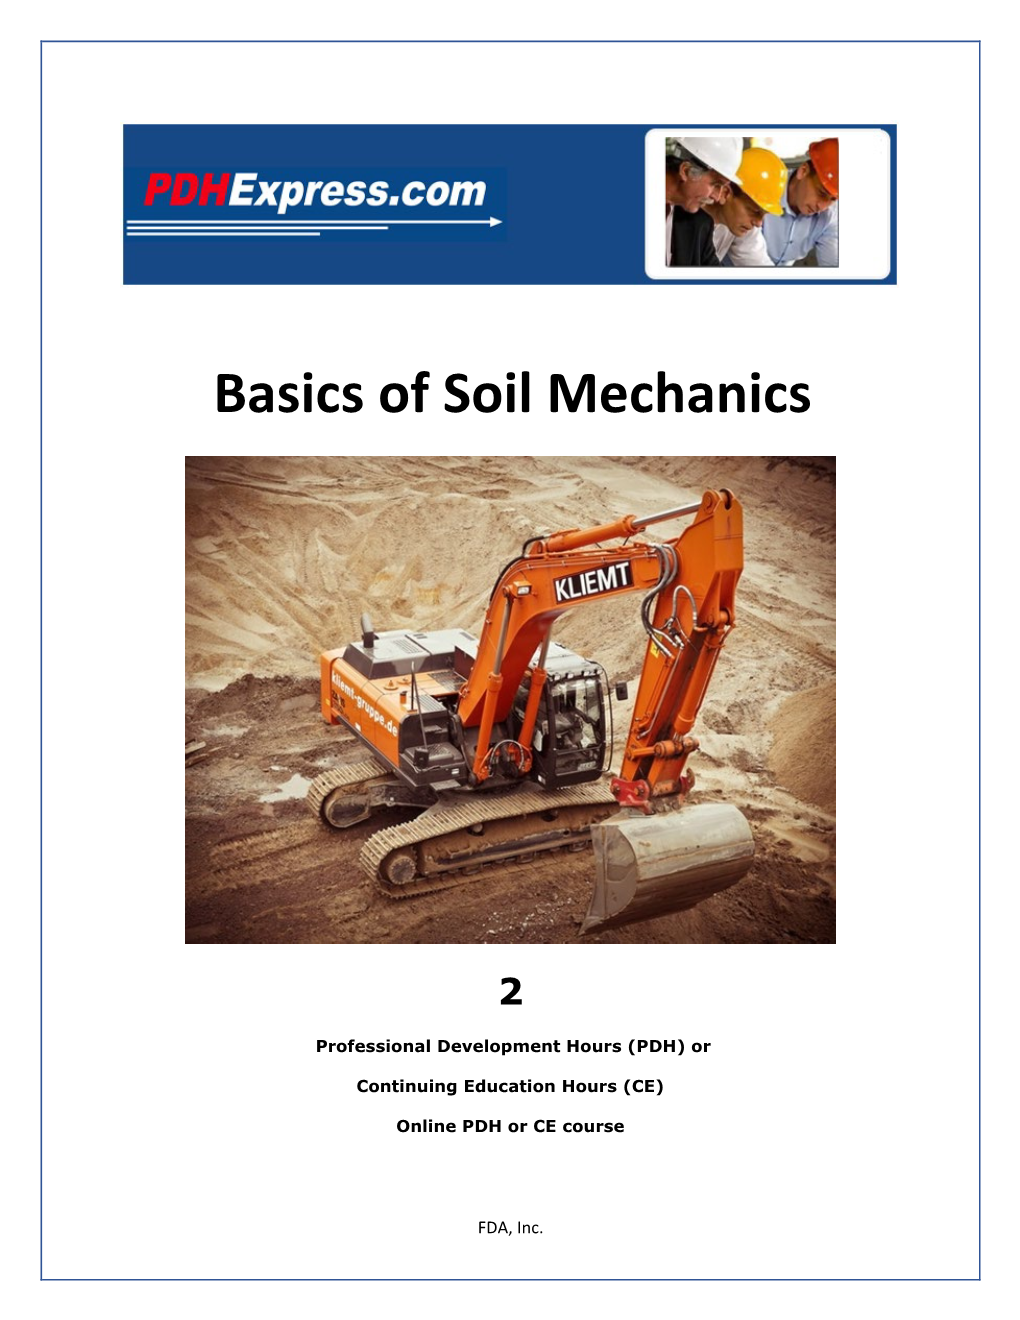 Basics of Soil Mechanics